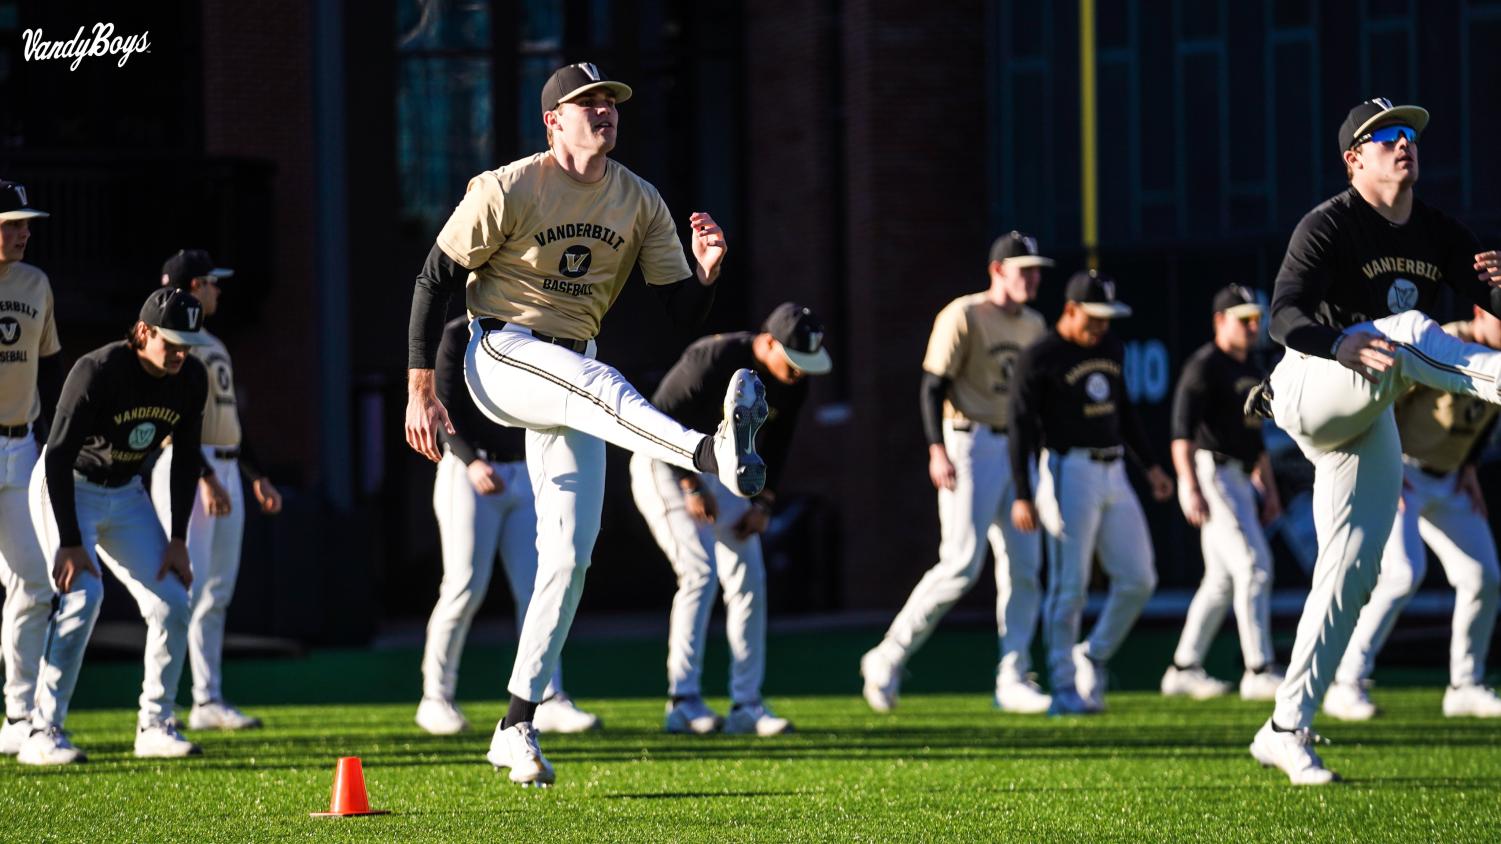 Jonathan Vastine: Vanderbilt baseball infielder in photos